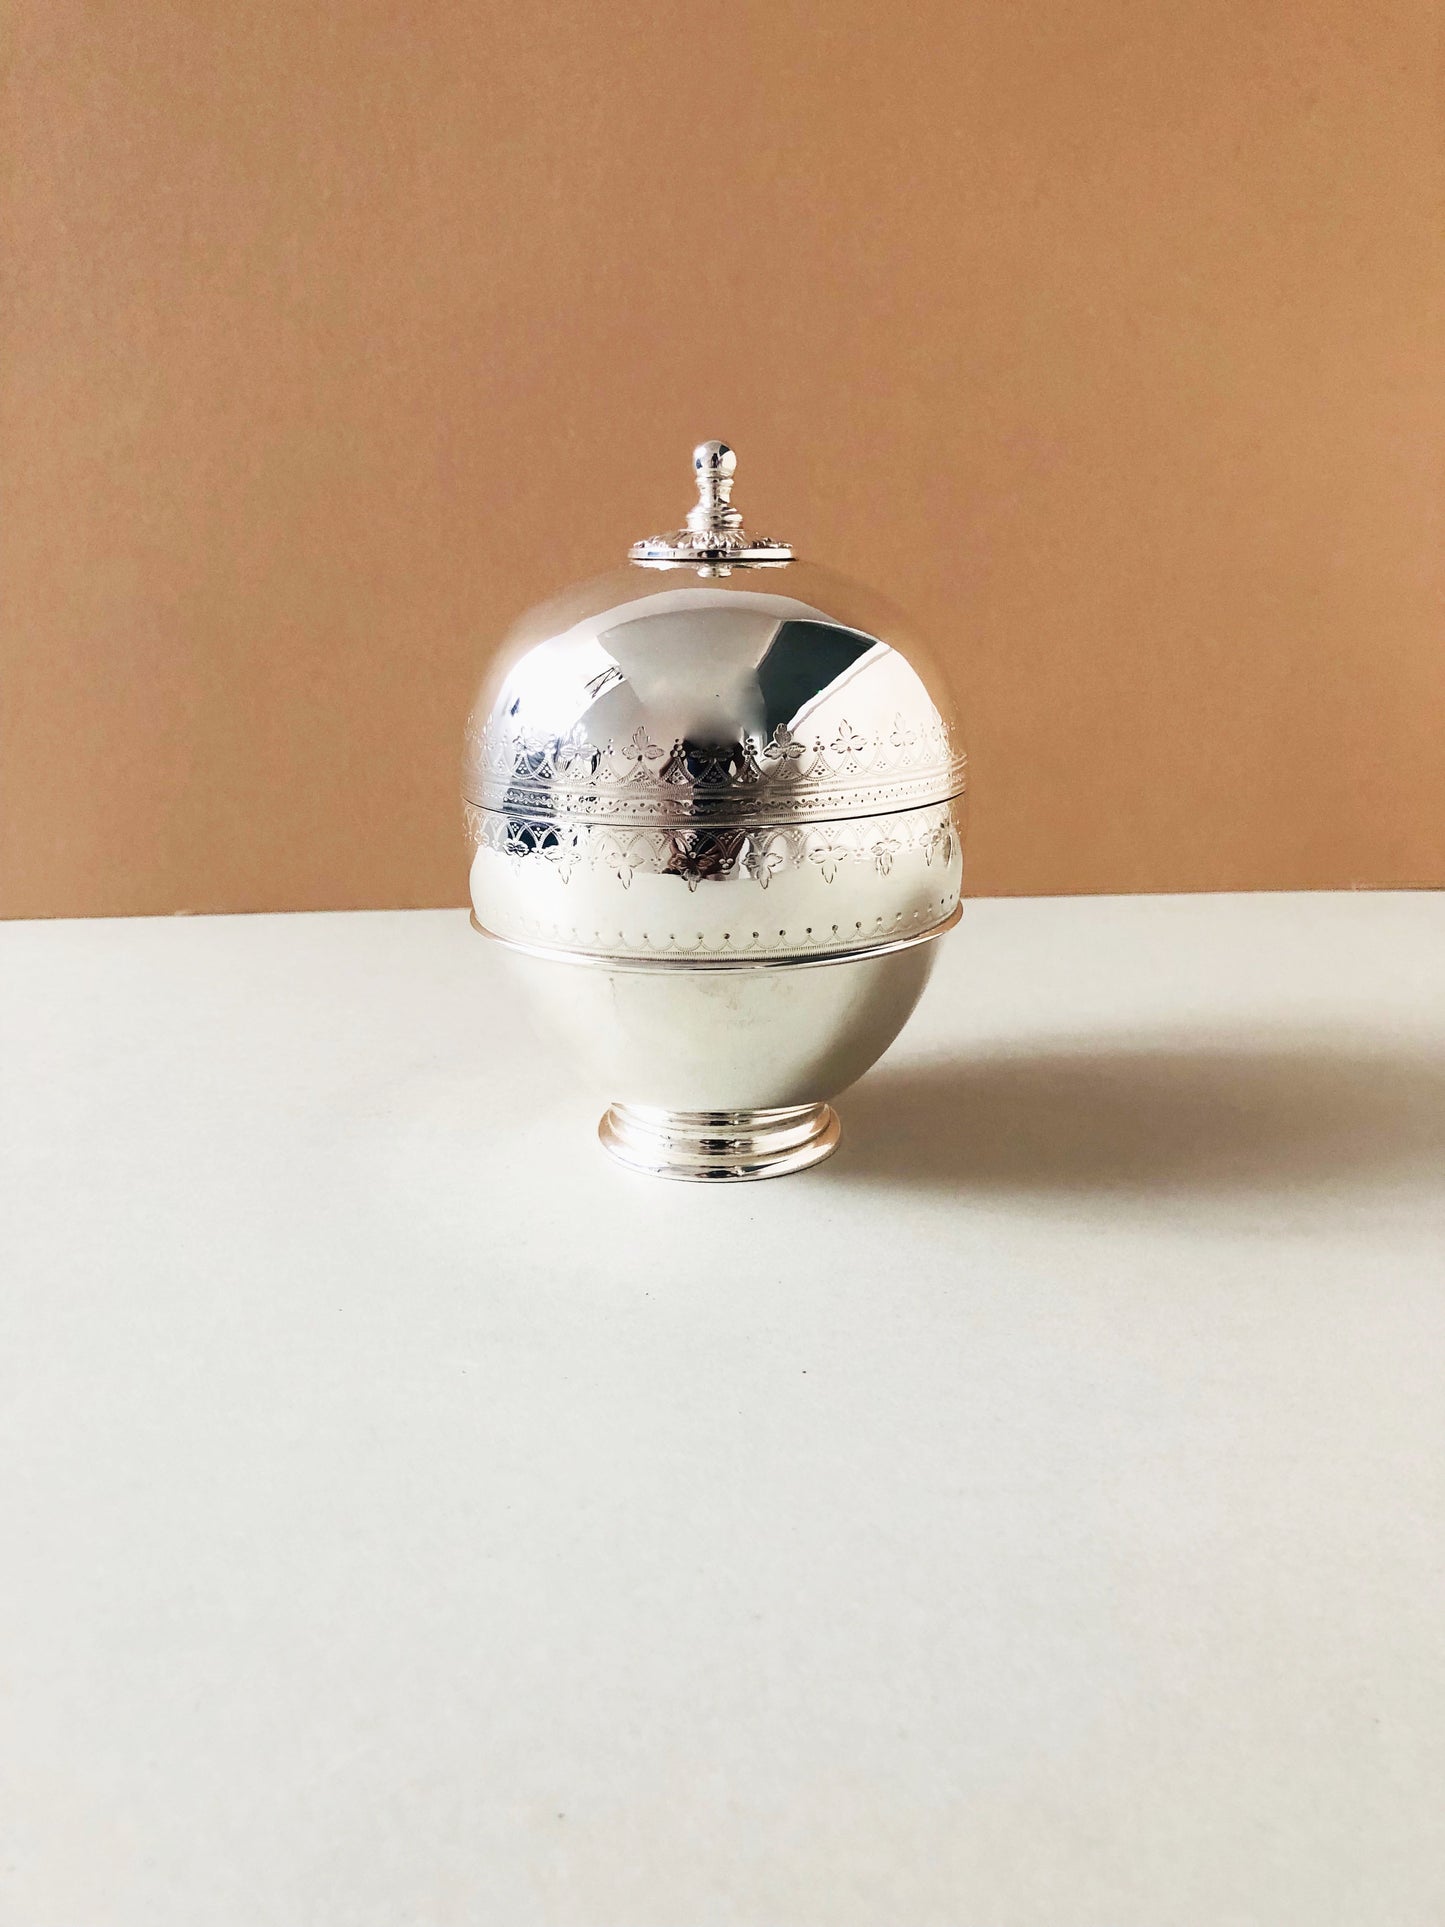 The Groom William - Luxury Antique Silver Egg Coddler